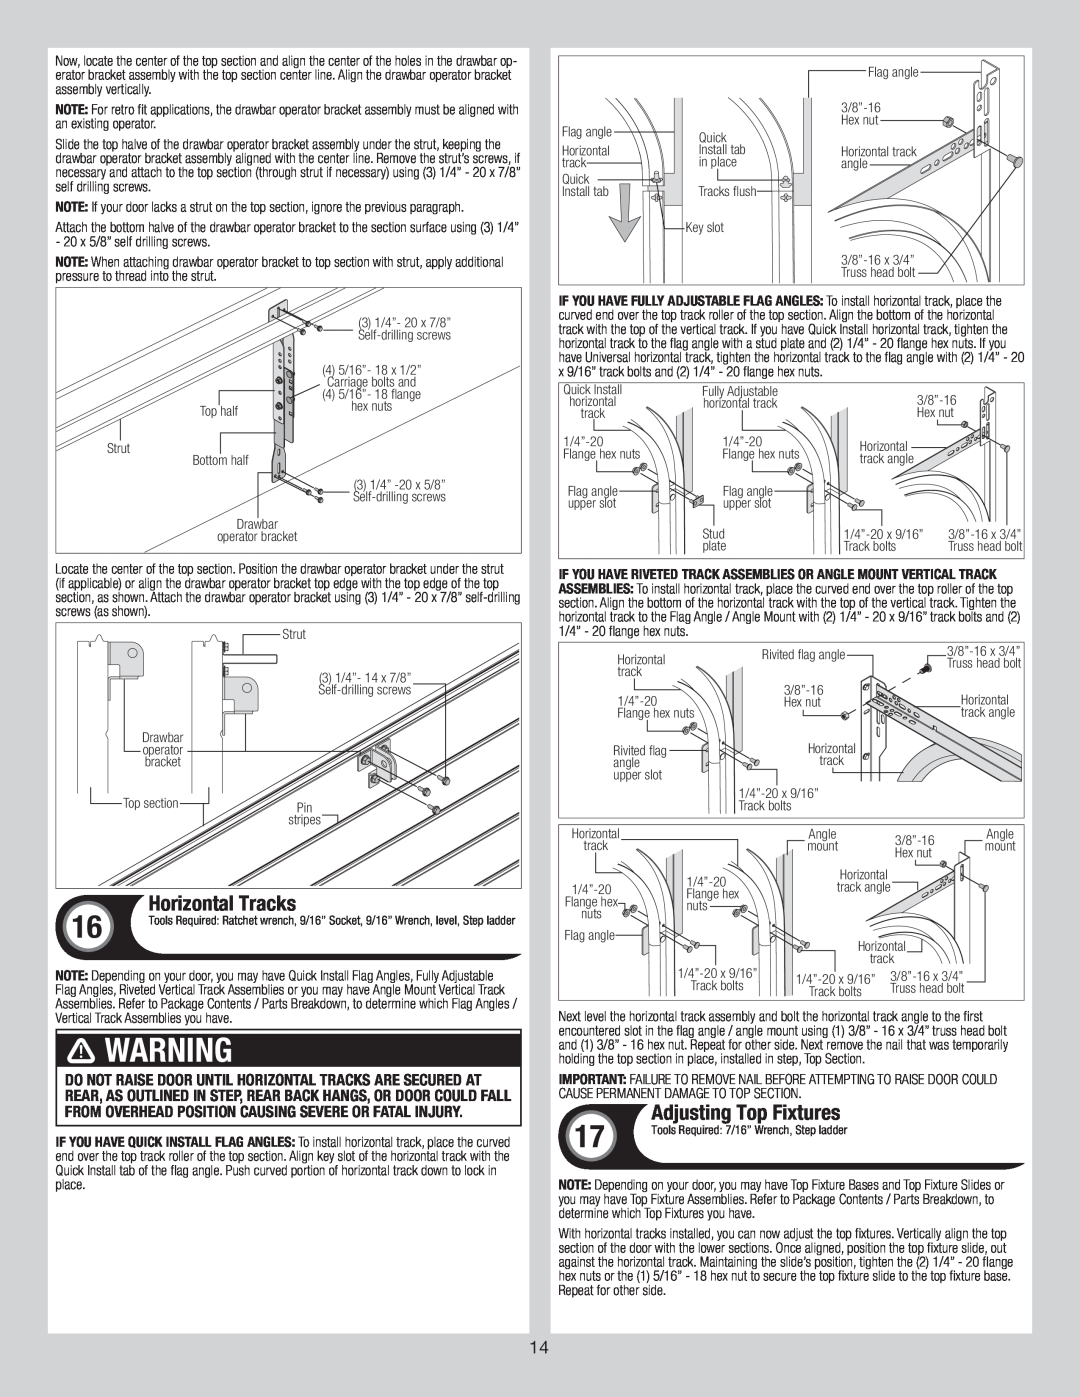 Wayne-Dalton 8300/8500 installation instructions Horizontal Tracks, Adjusting Top Fixtures, WarningARNING 